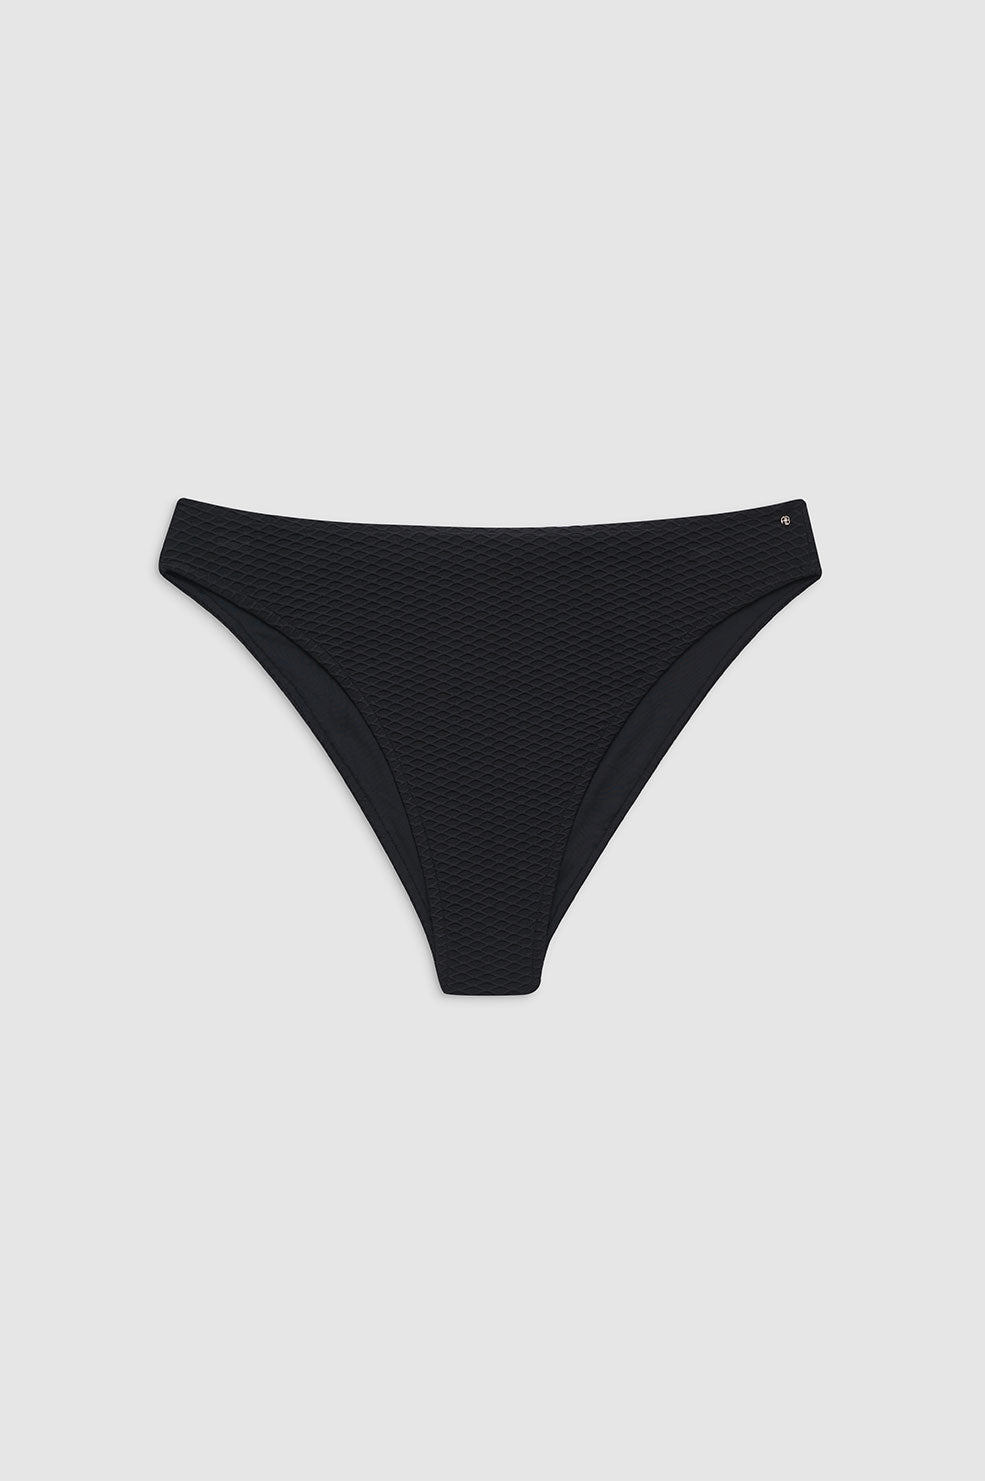 ANINE BING Rita Bikini Bottom - Black - Front View